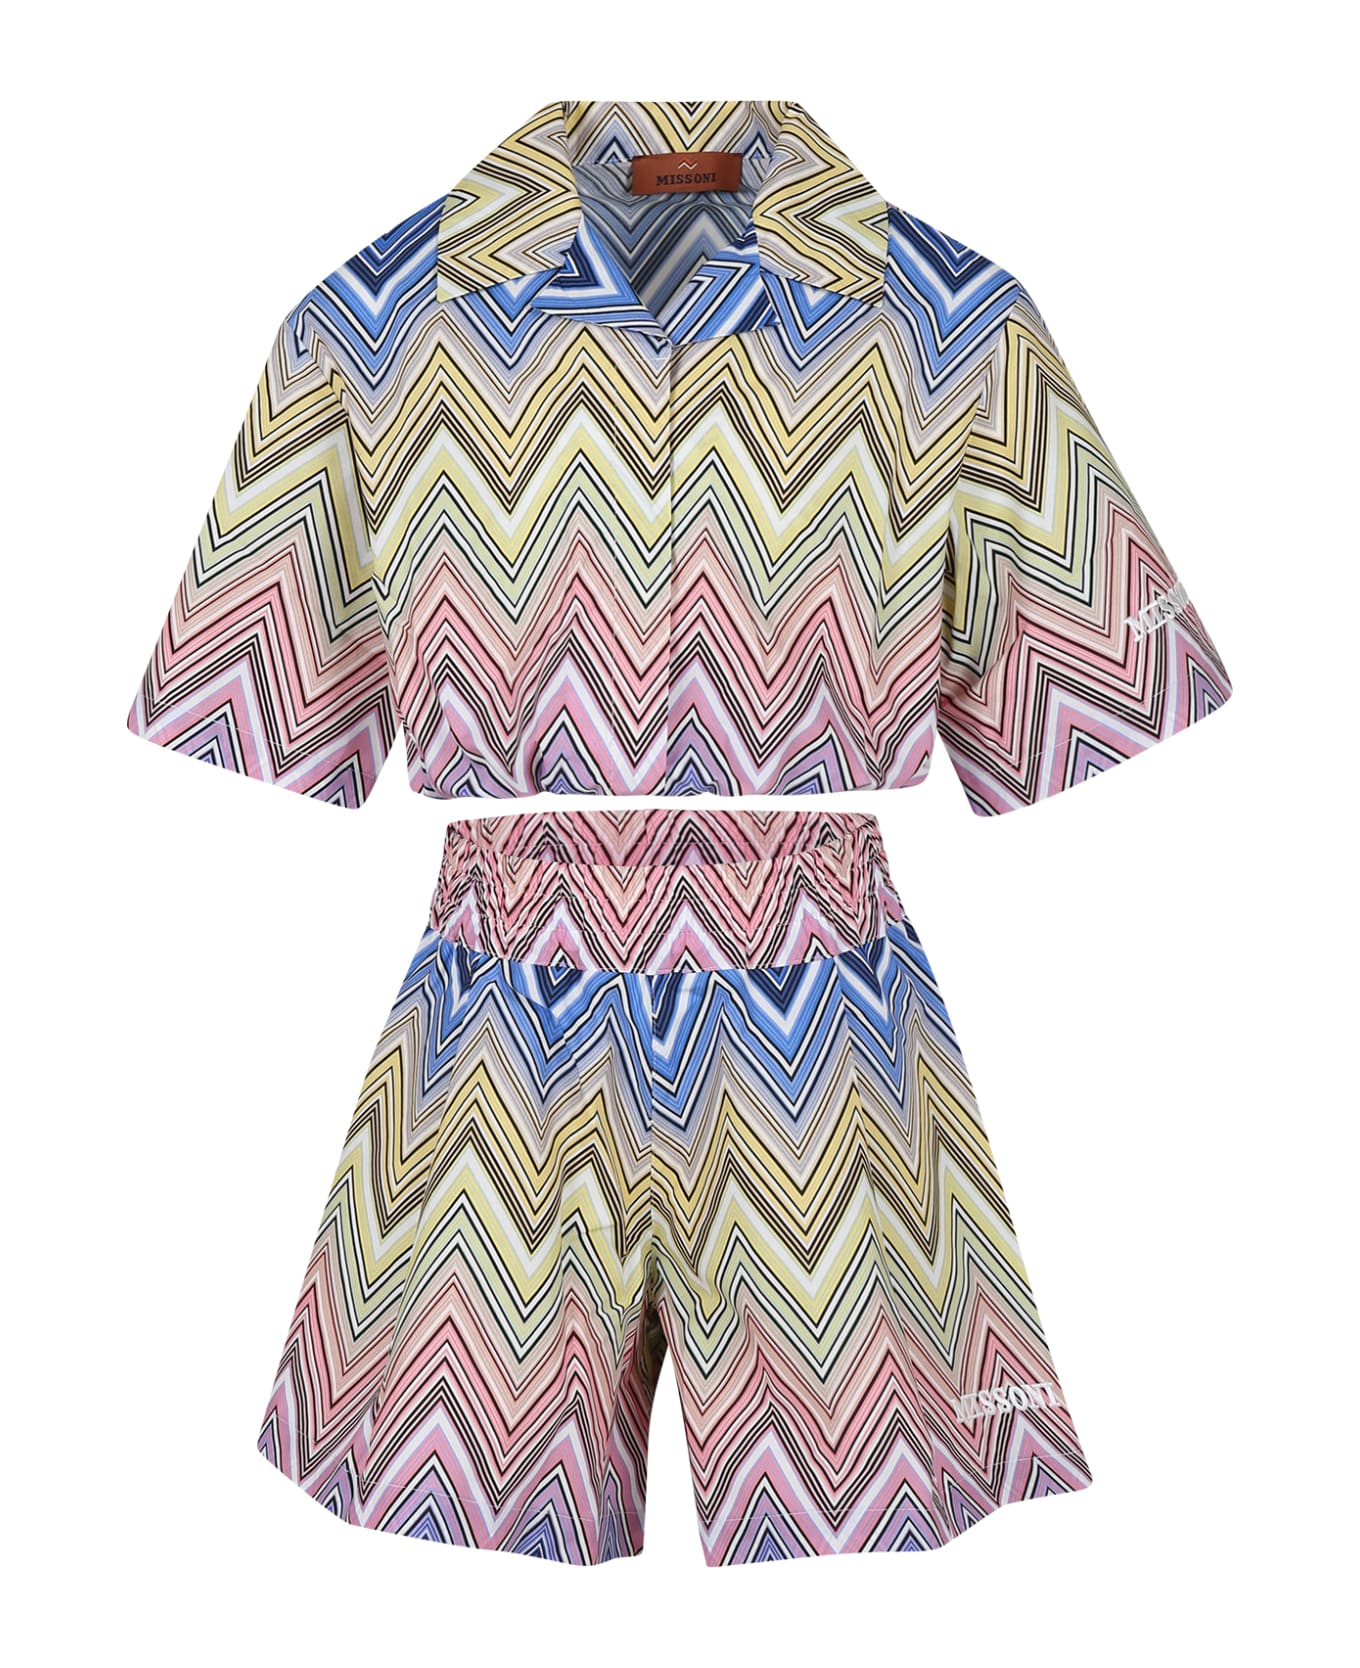 Missoni Multicolor Suit For Girl With Chevron Pattern - Multicolor